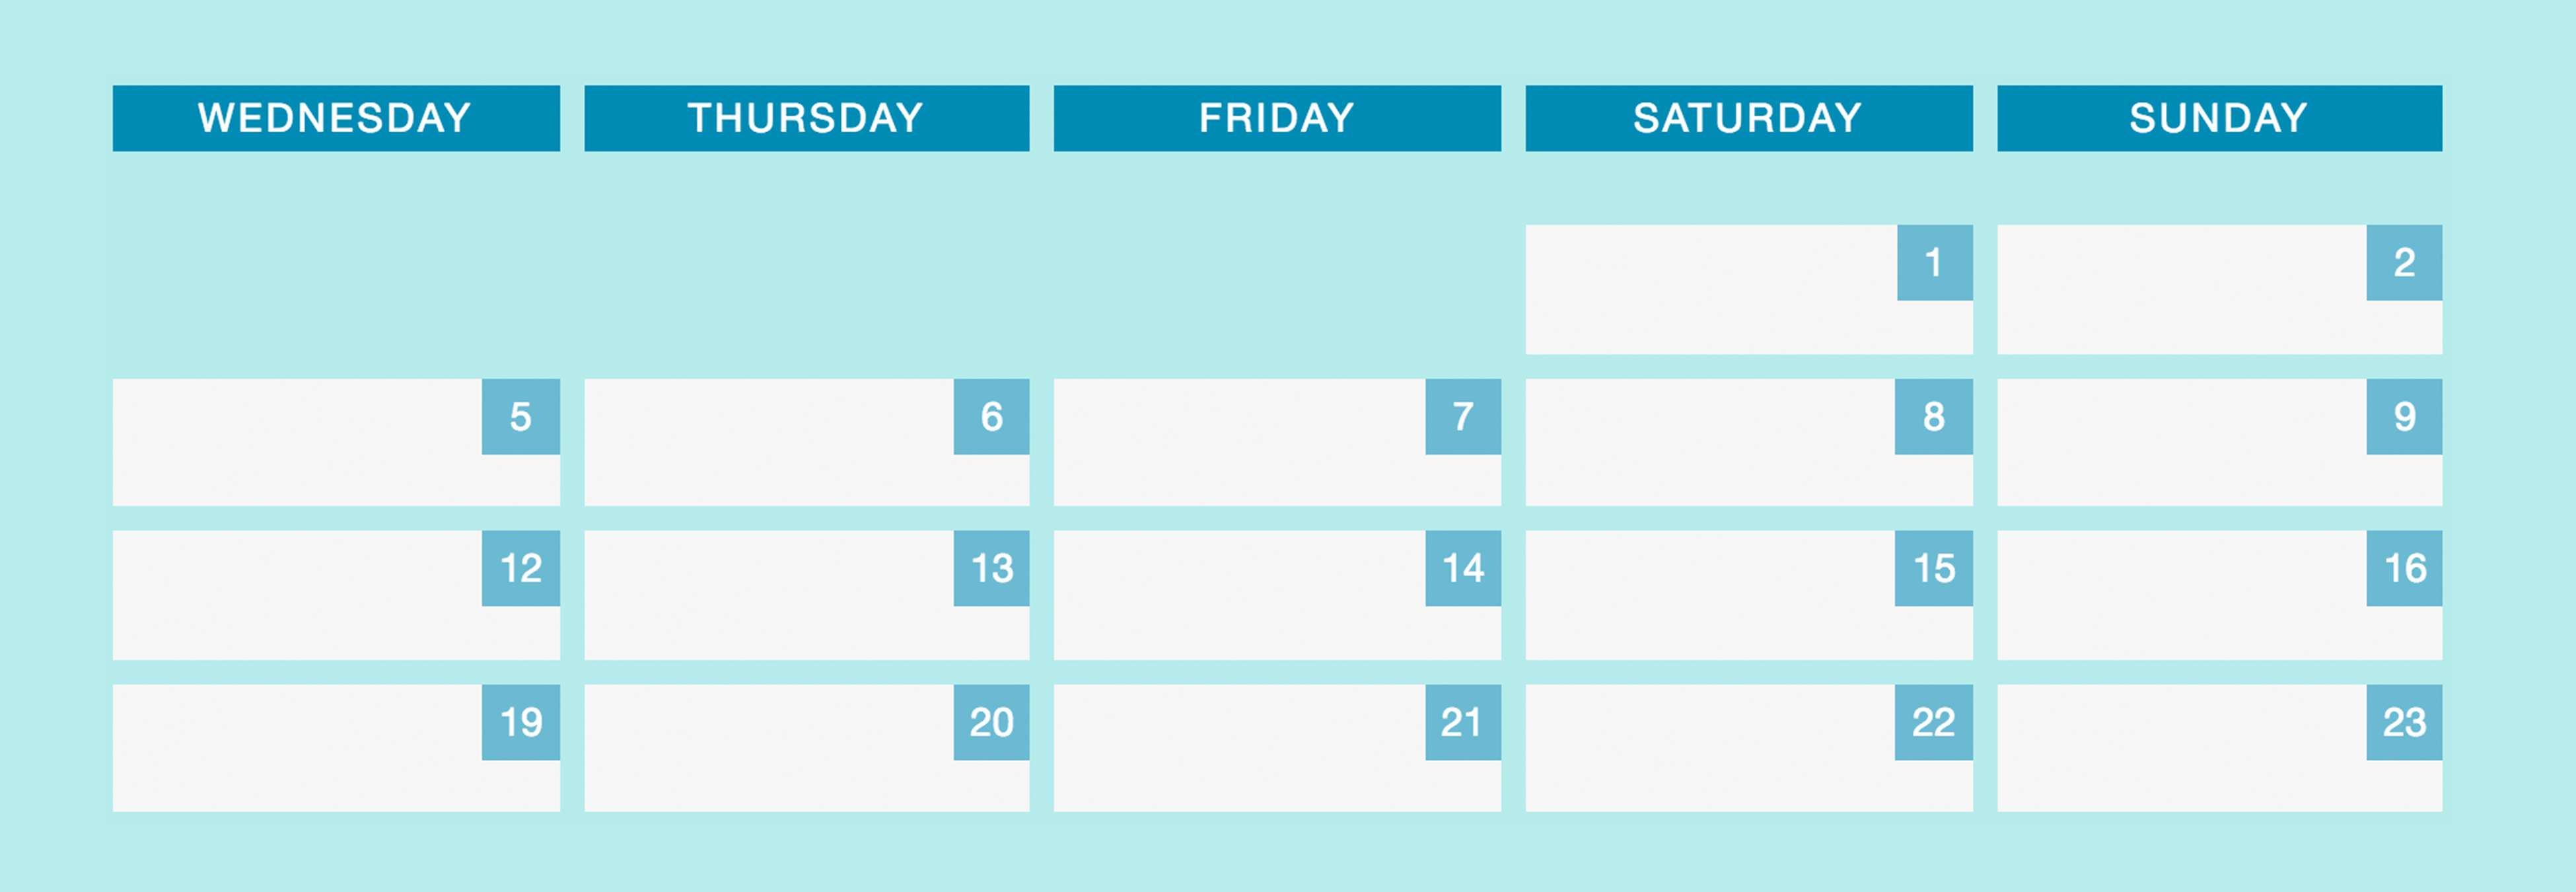 Making A Responsive Calendar For Dynamic Dates Using Flexbox